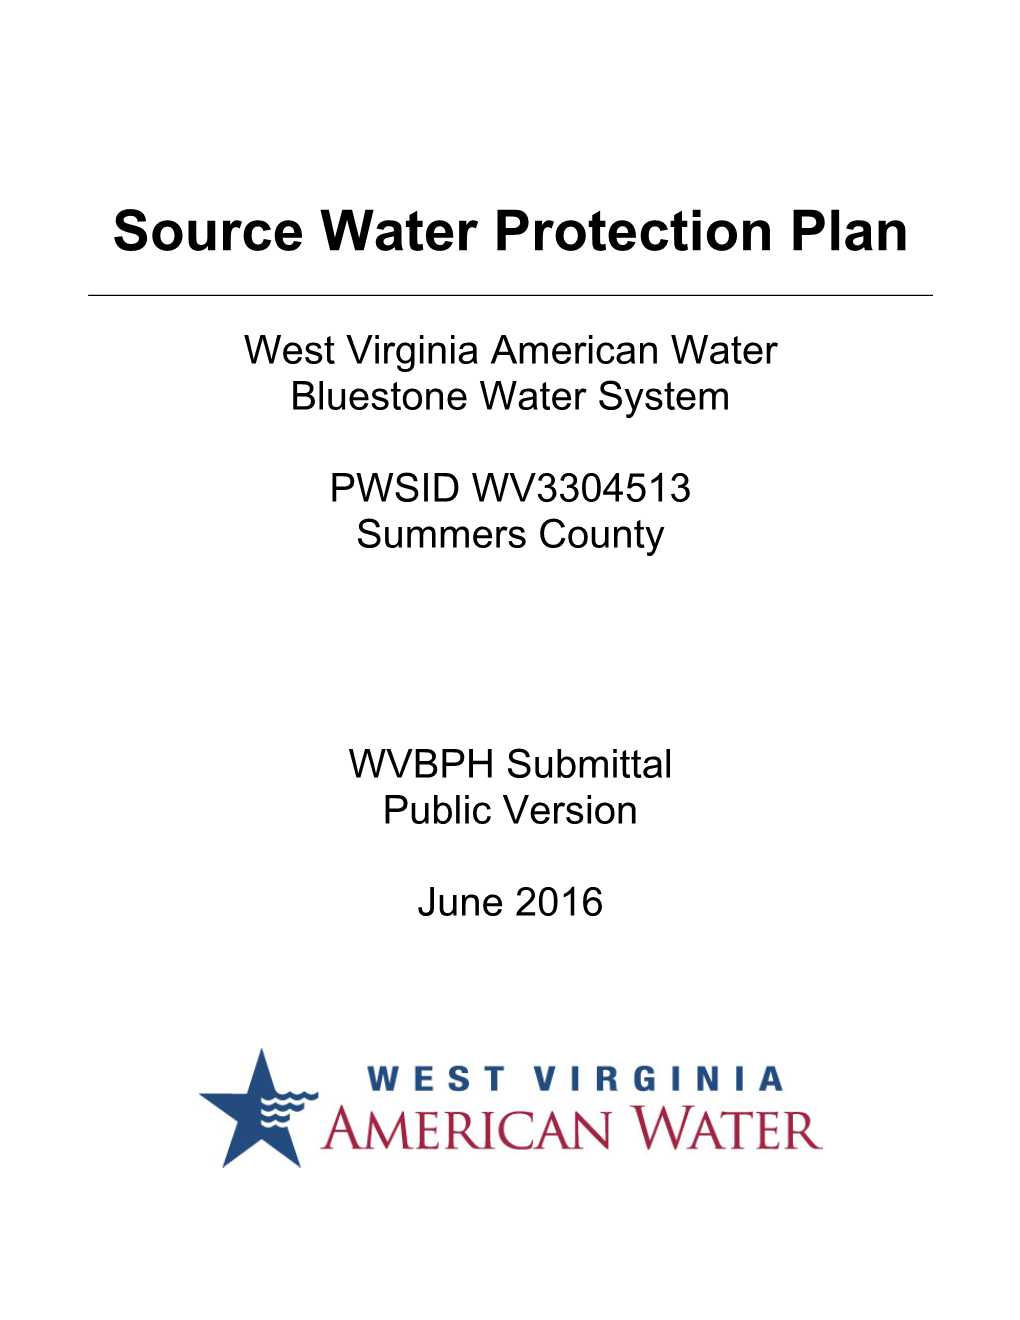 Bluestone Source Water Protection Plan